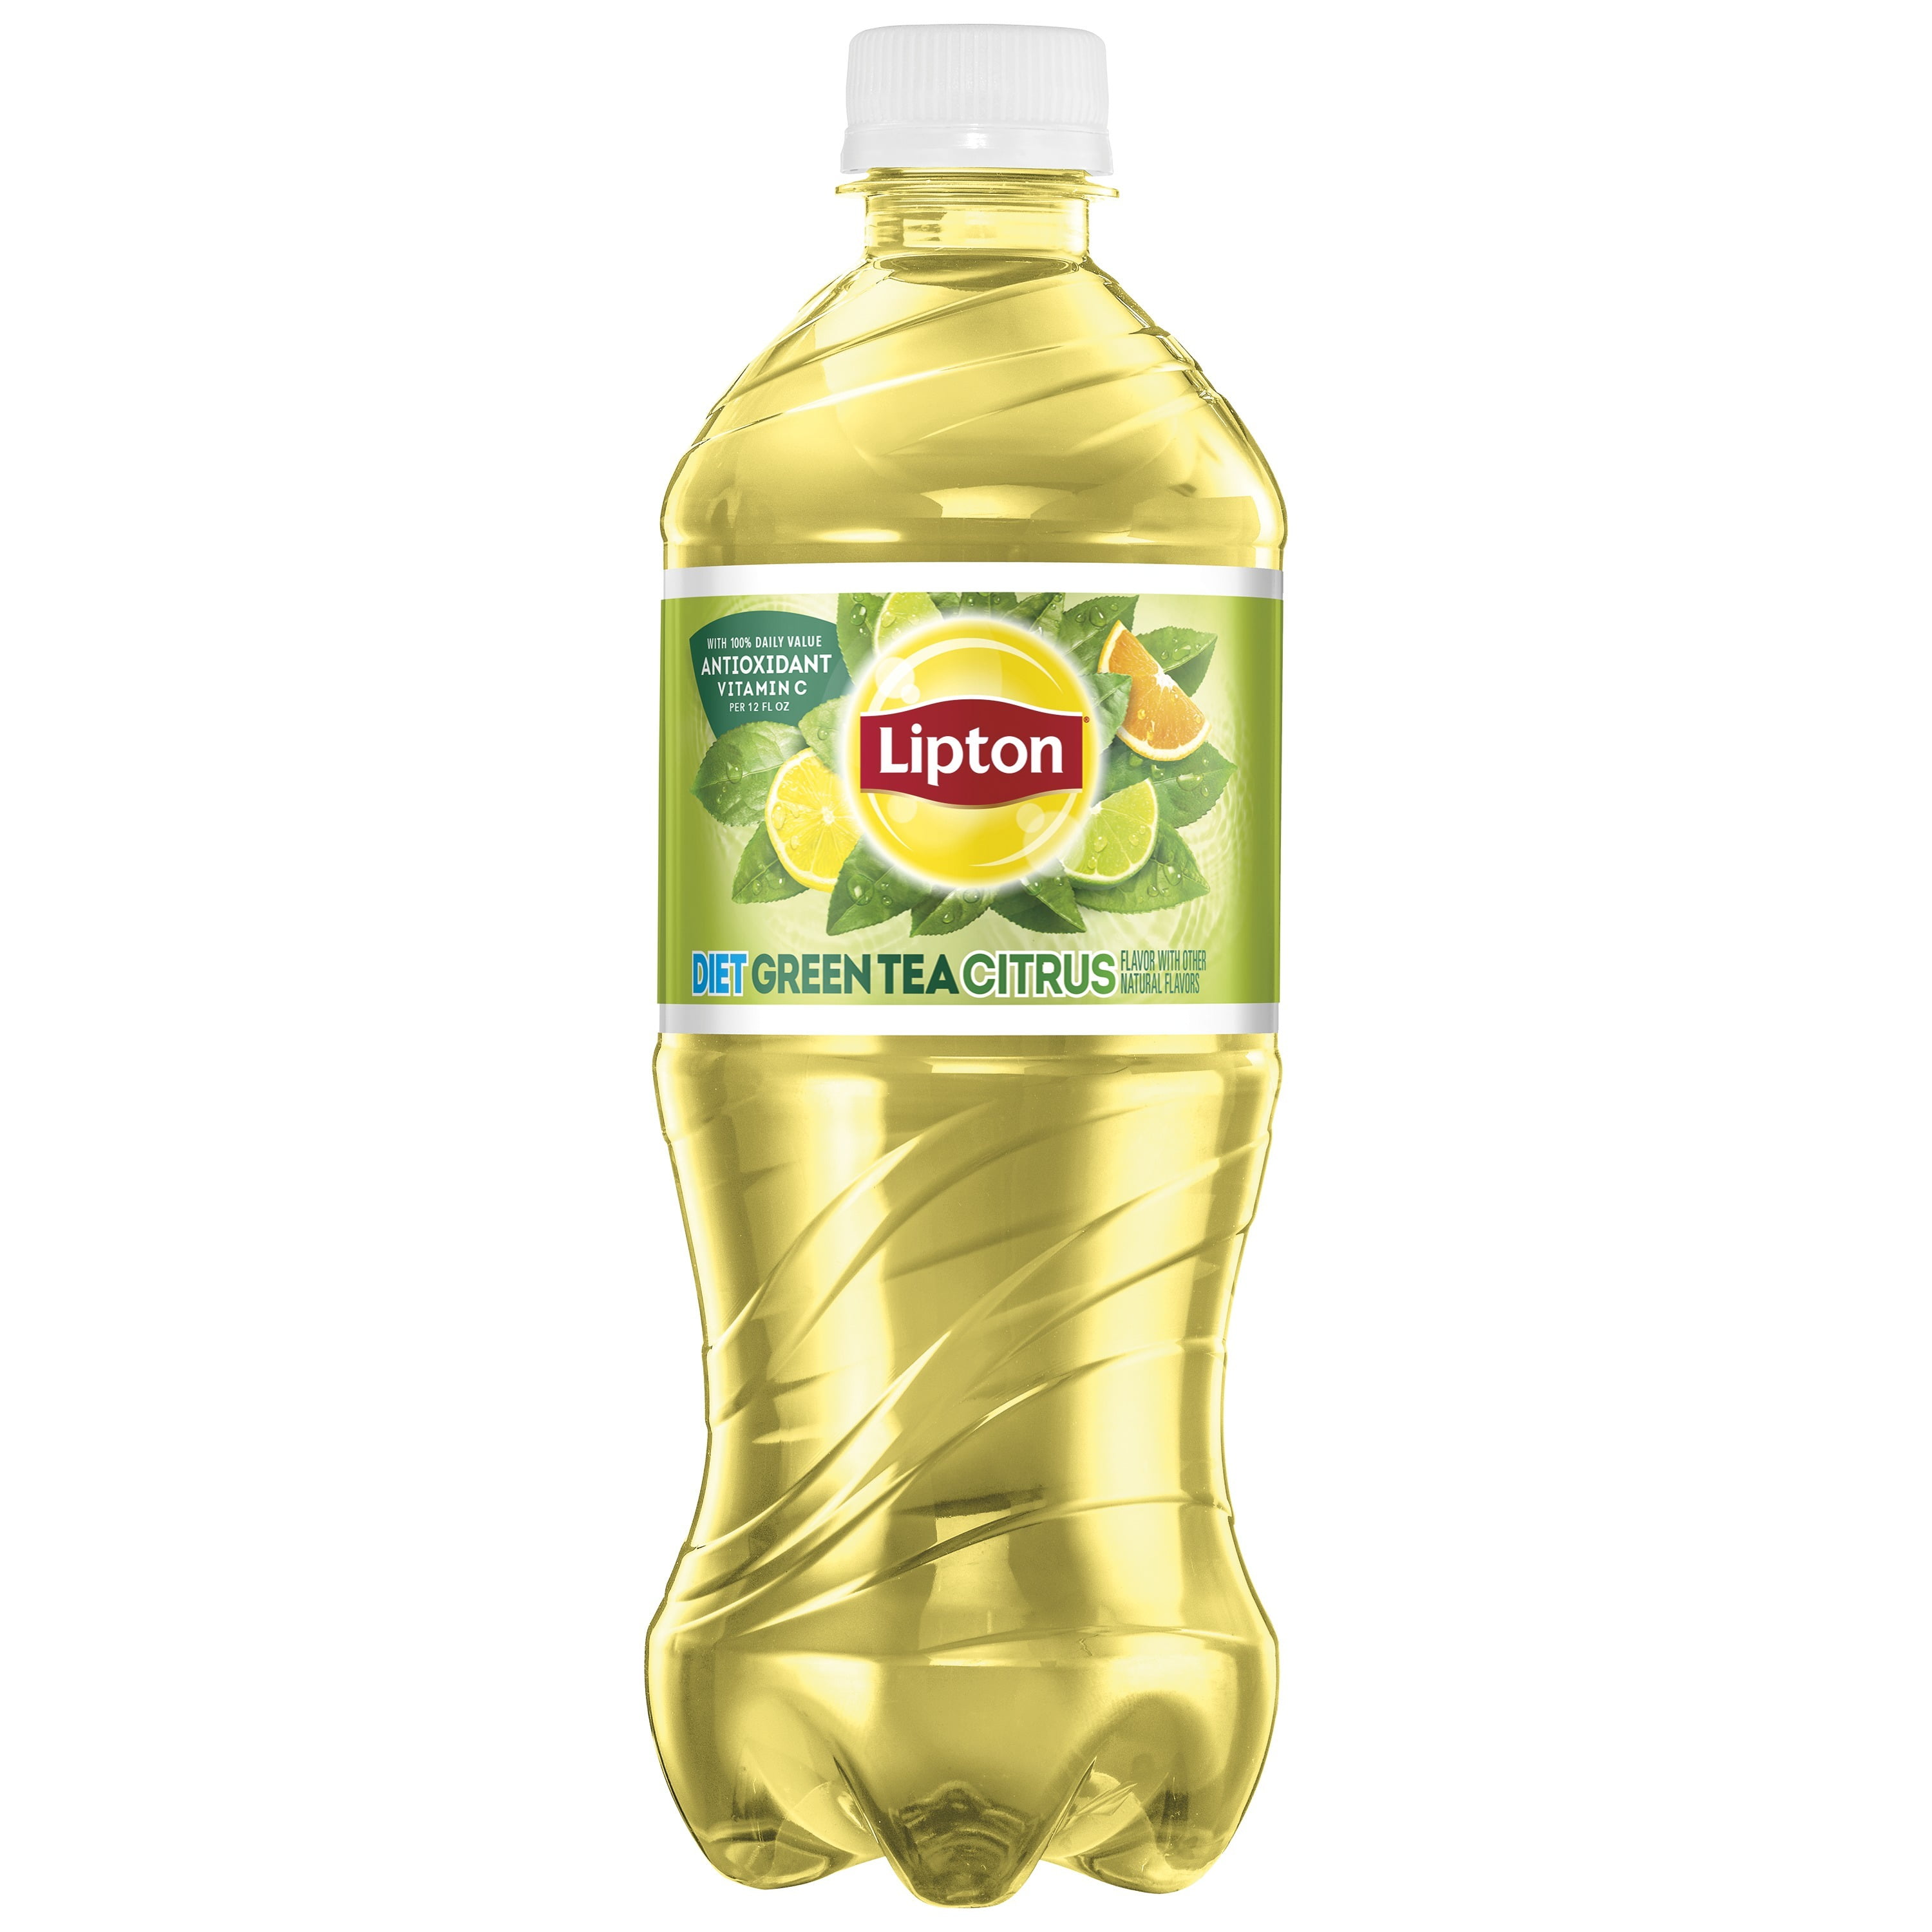 Lipton Diet Green Tea Citrus, 20 oz Bottle - Walmart.com ...